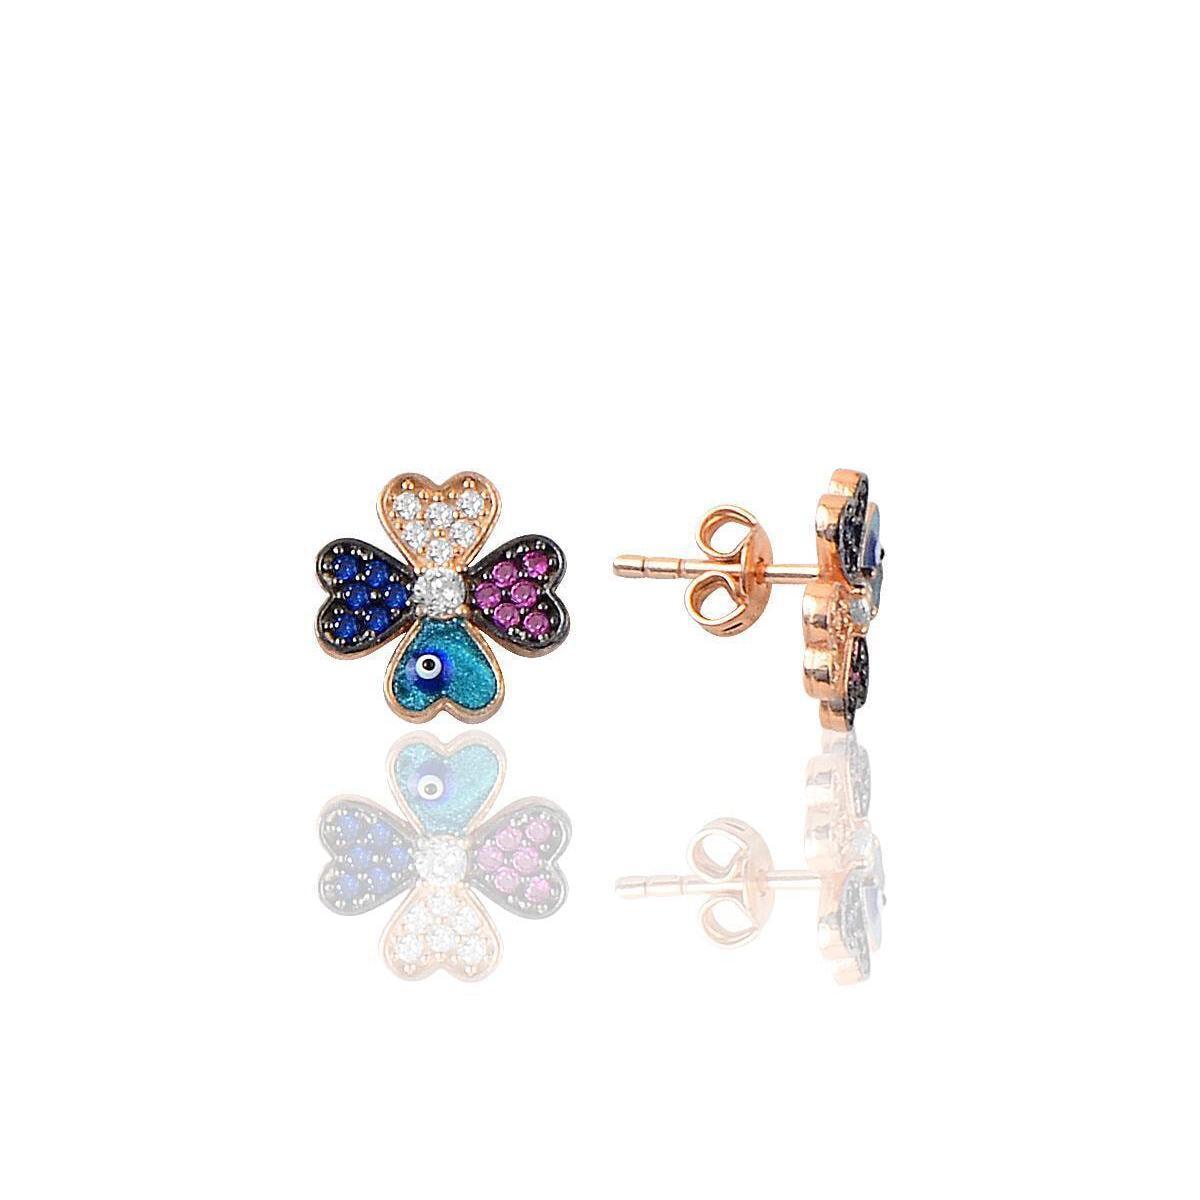 Four Leaf Clover Earrings Silver • Four Leaf Clover Stud Earrings - Trending Silver Gifts